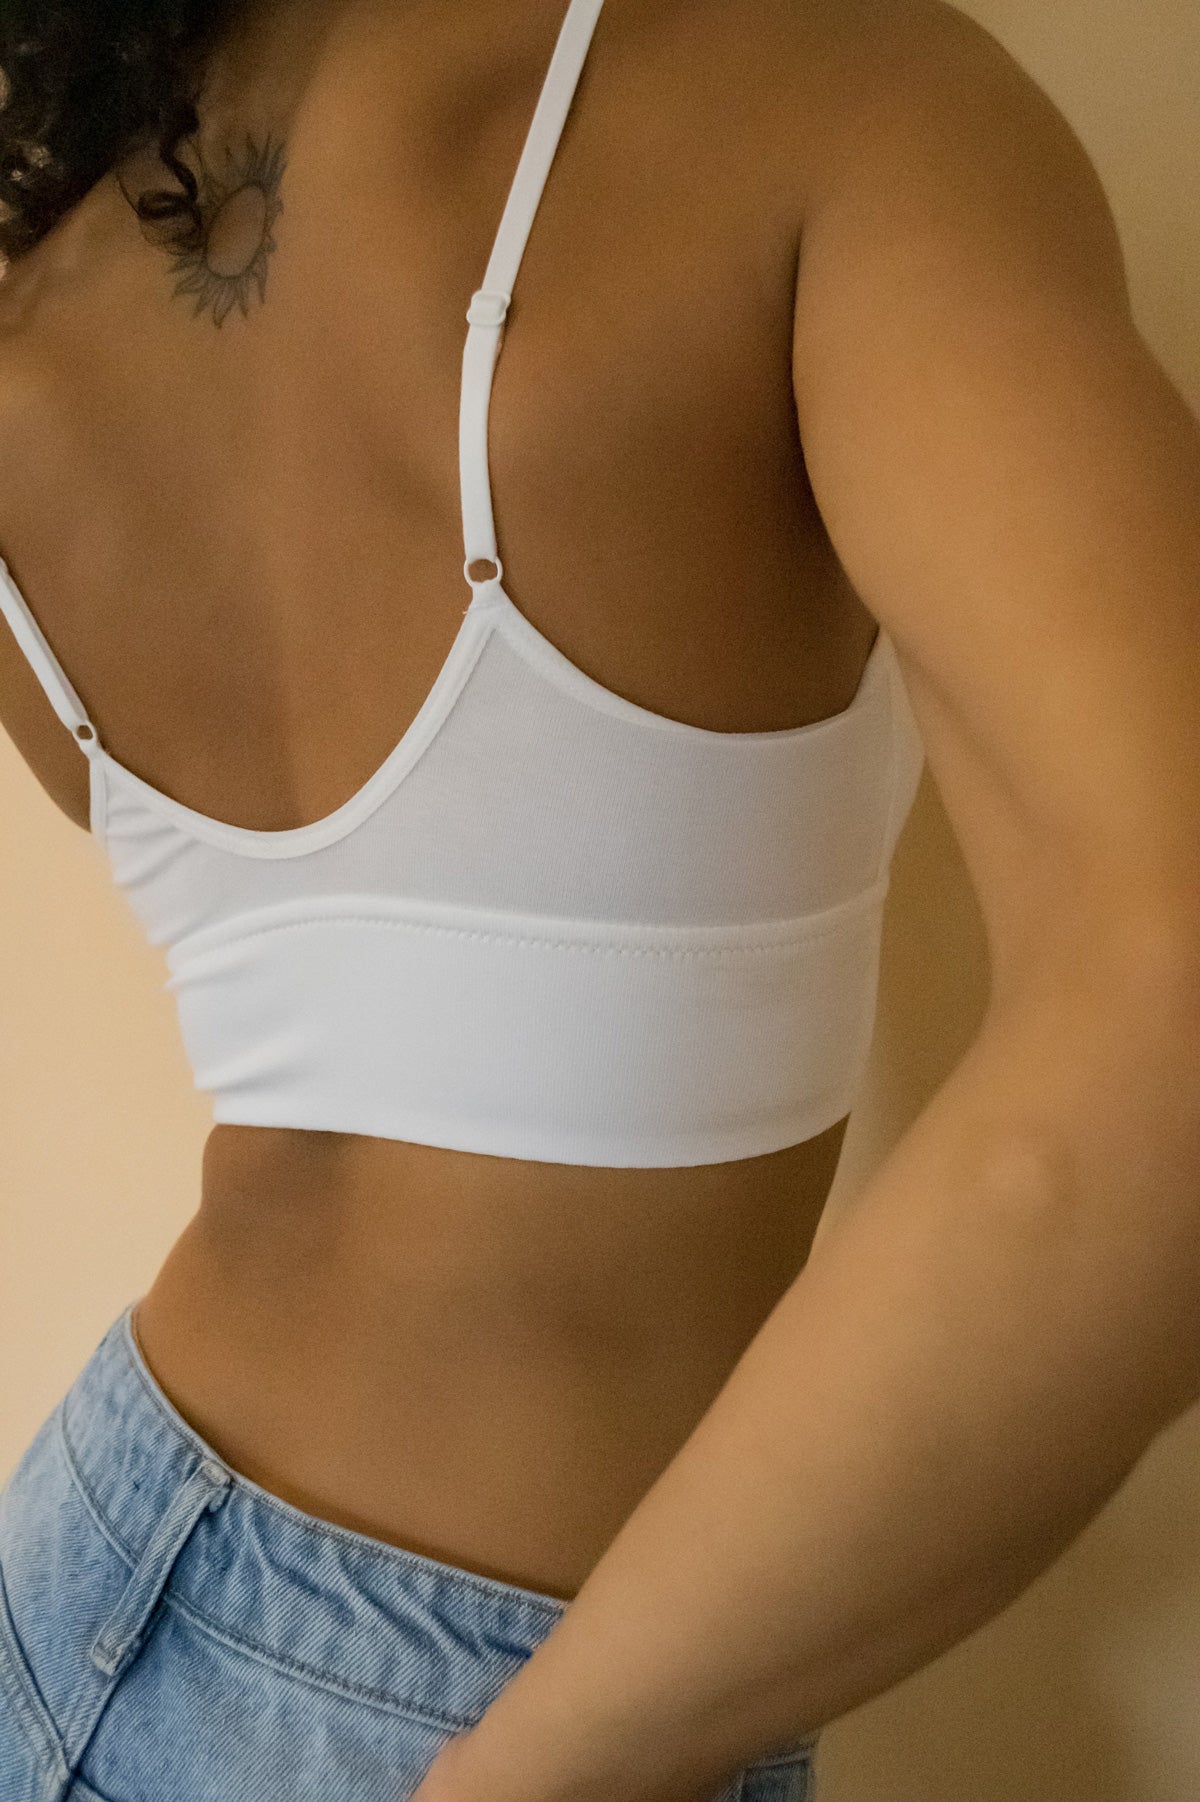 OnGossamer Women's Cabana Cotton T-Shirt Bra in White (G3194), Size 32B